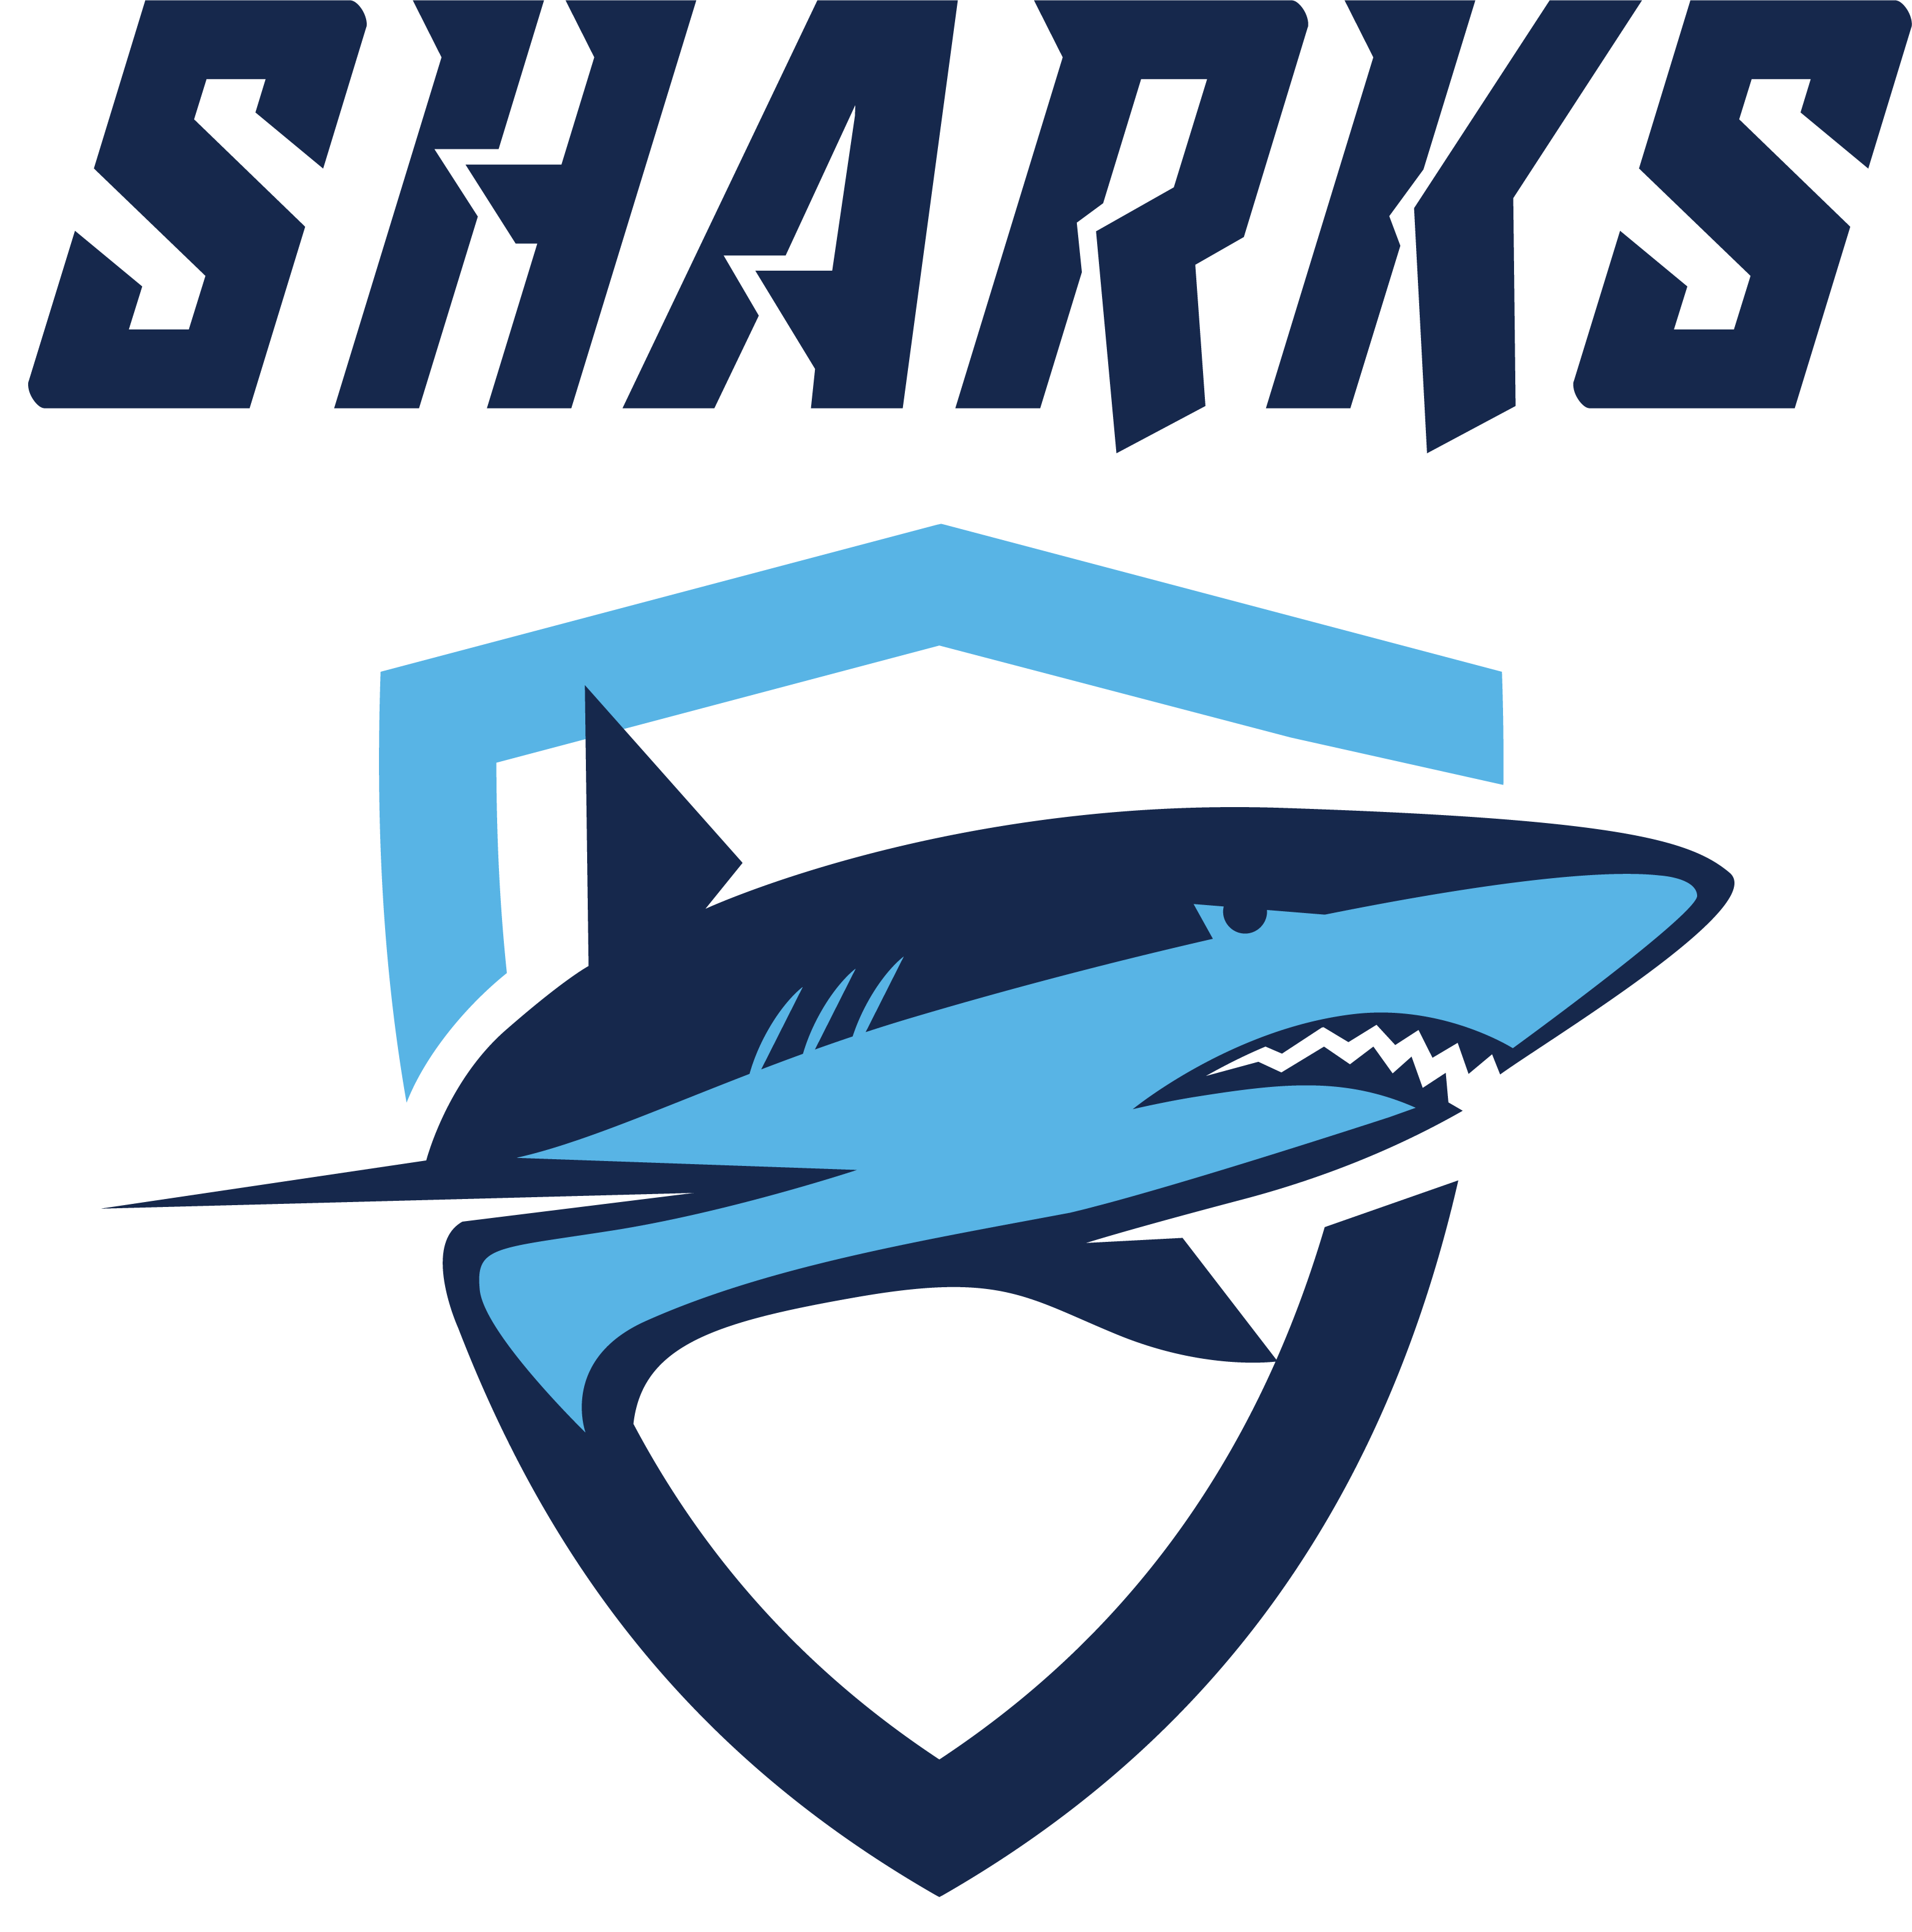 SHARKS Swim Club